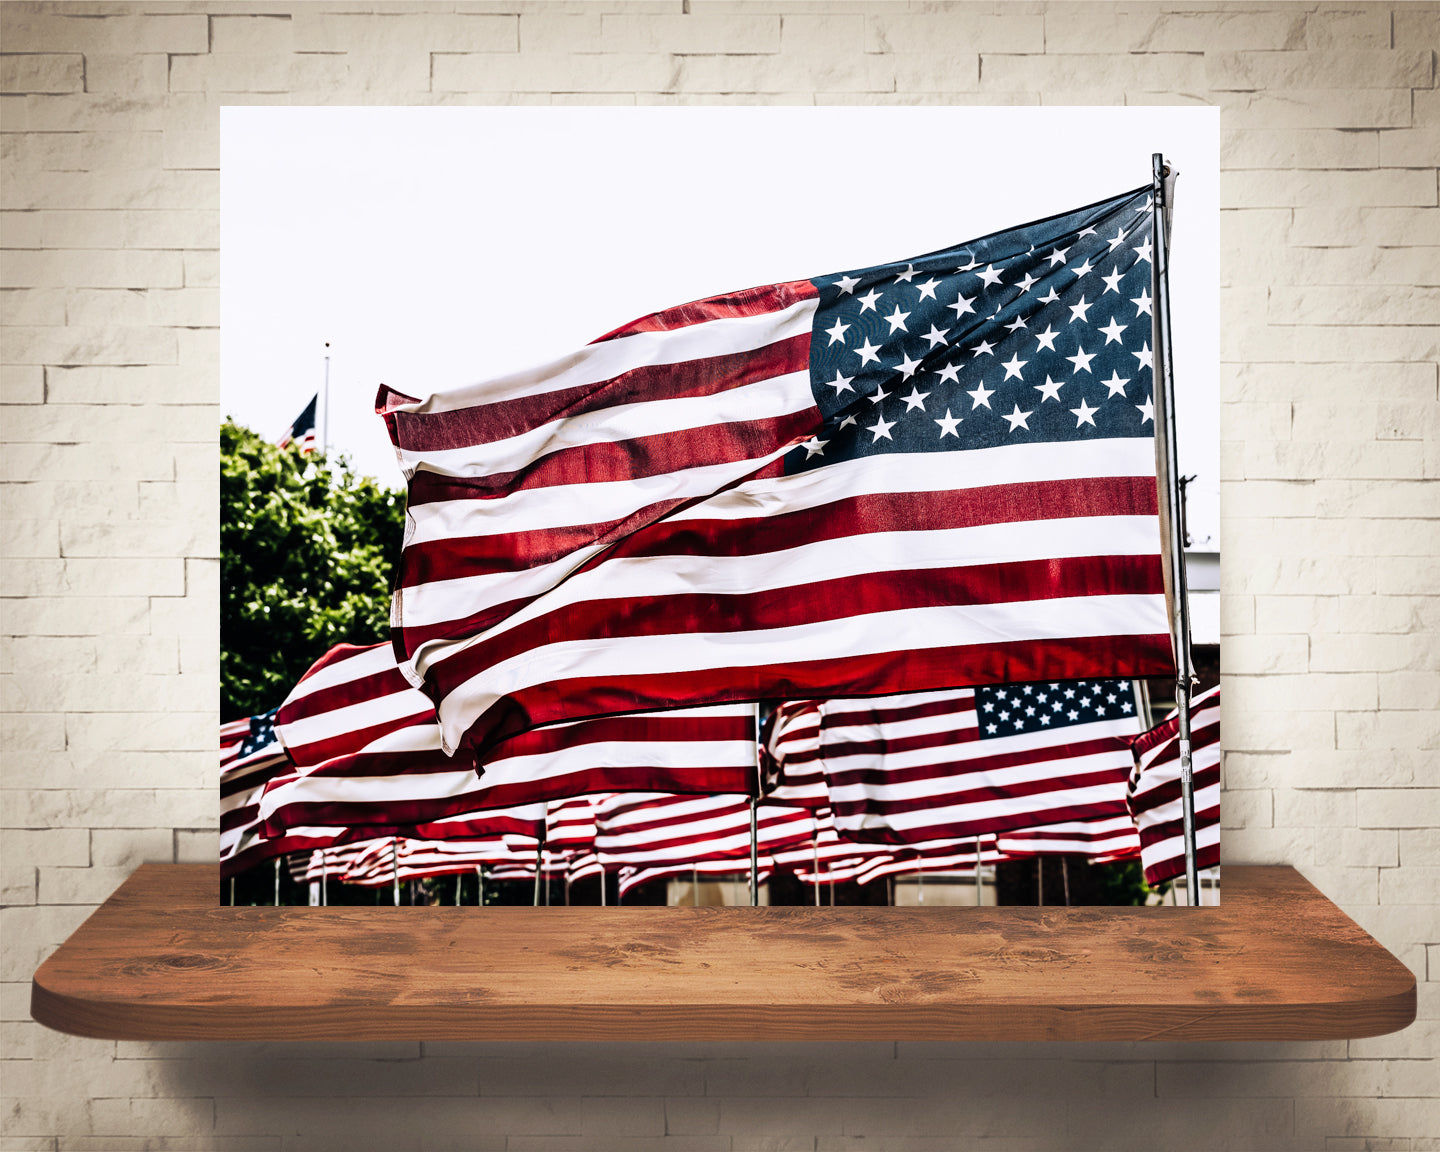 American Flag Photograph